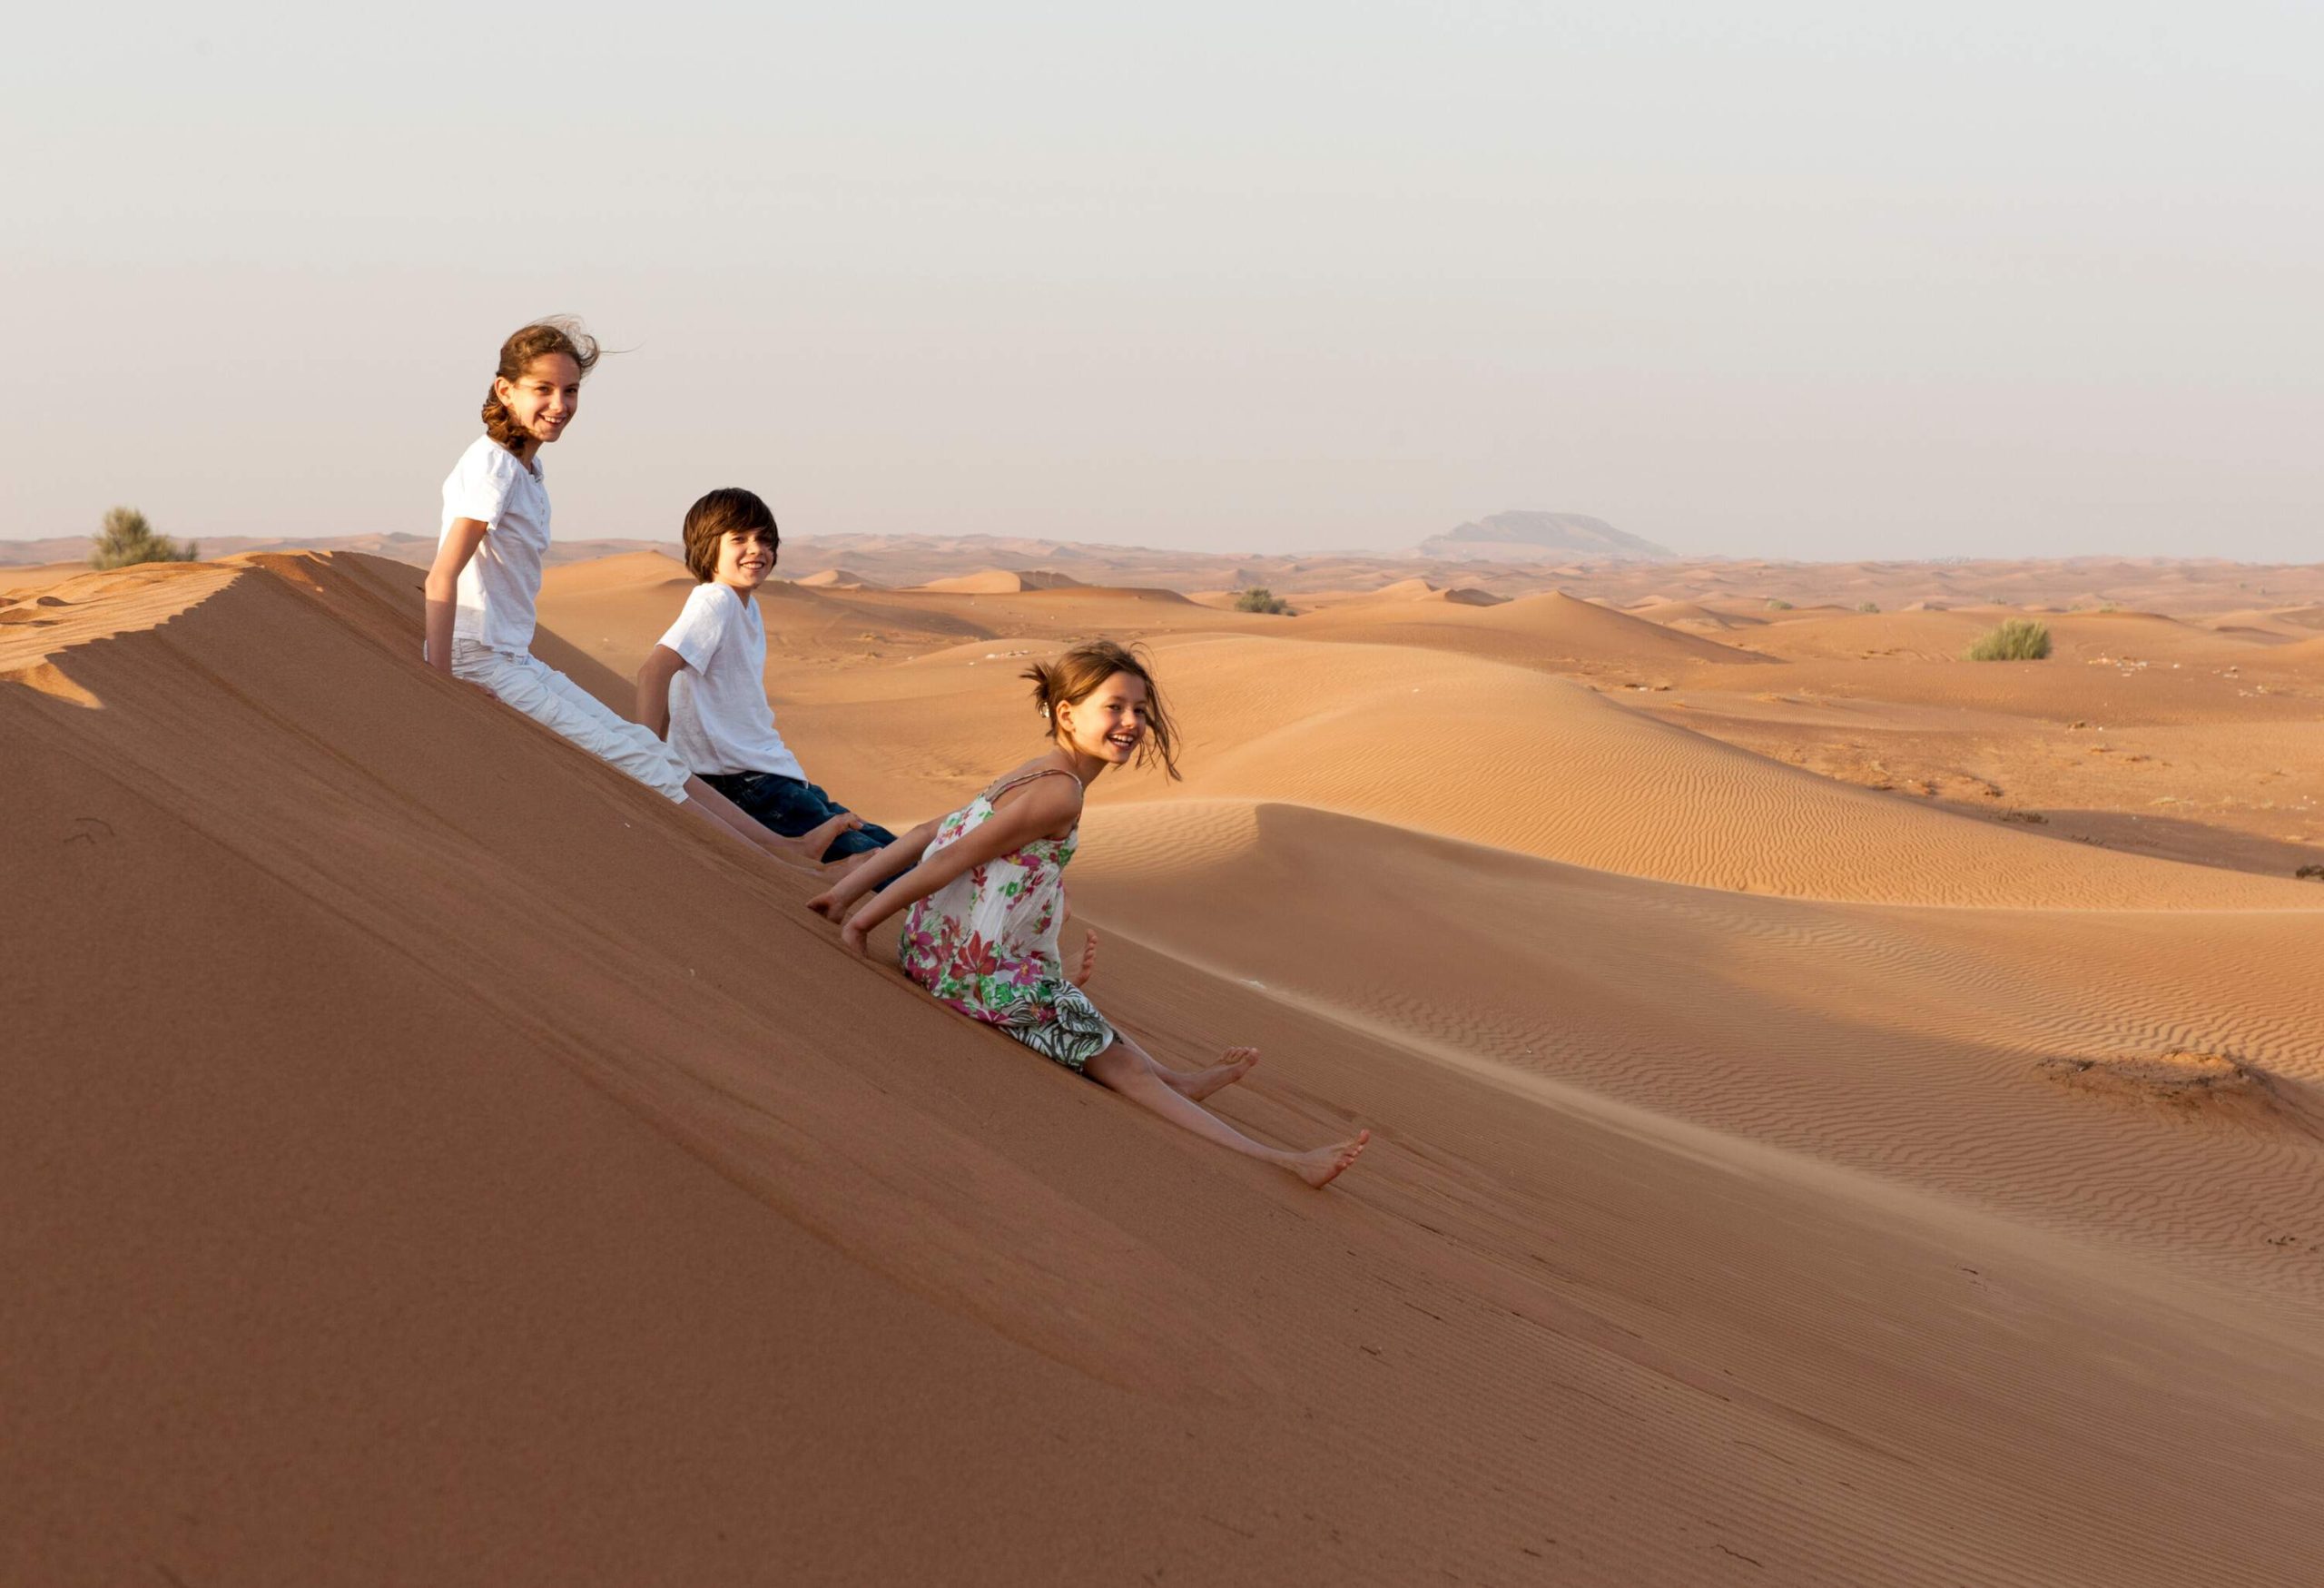 Three kids sliding down a mound of sand in the desert.